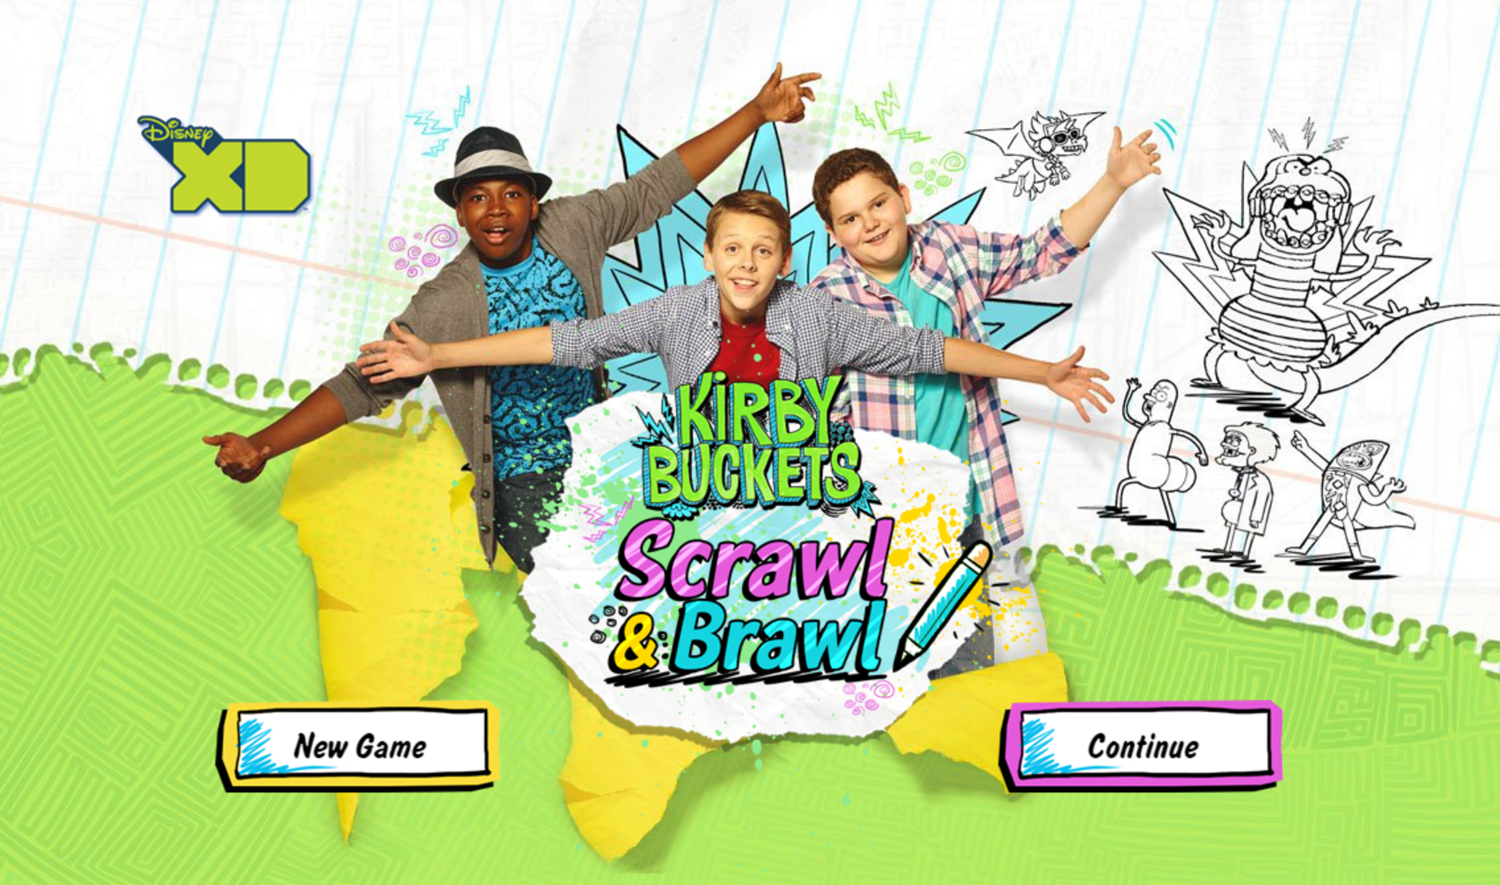 Kirby Buckets Scrawl & Brawl Game Welcome Screen Screenshot.